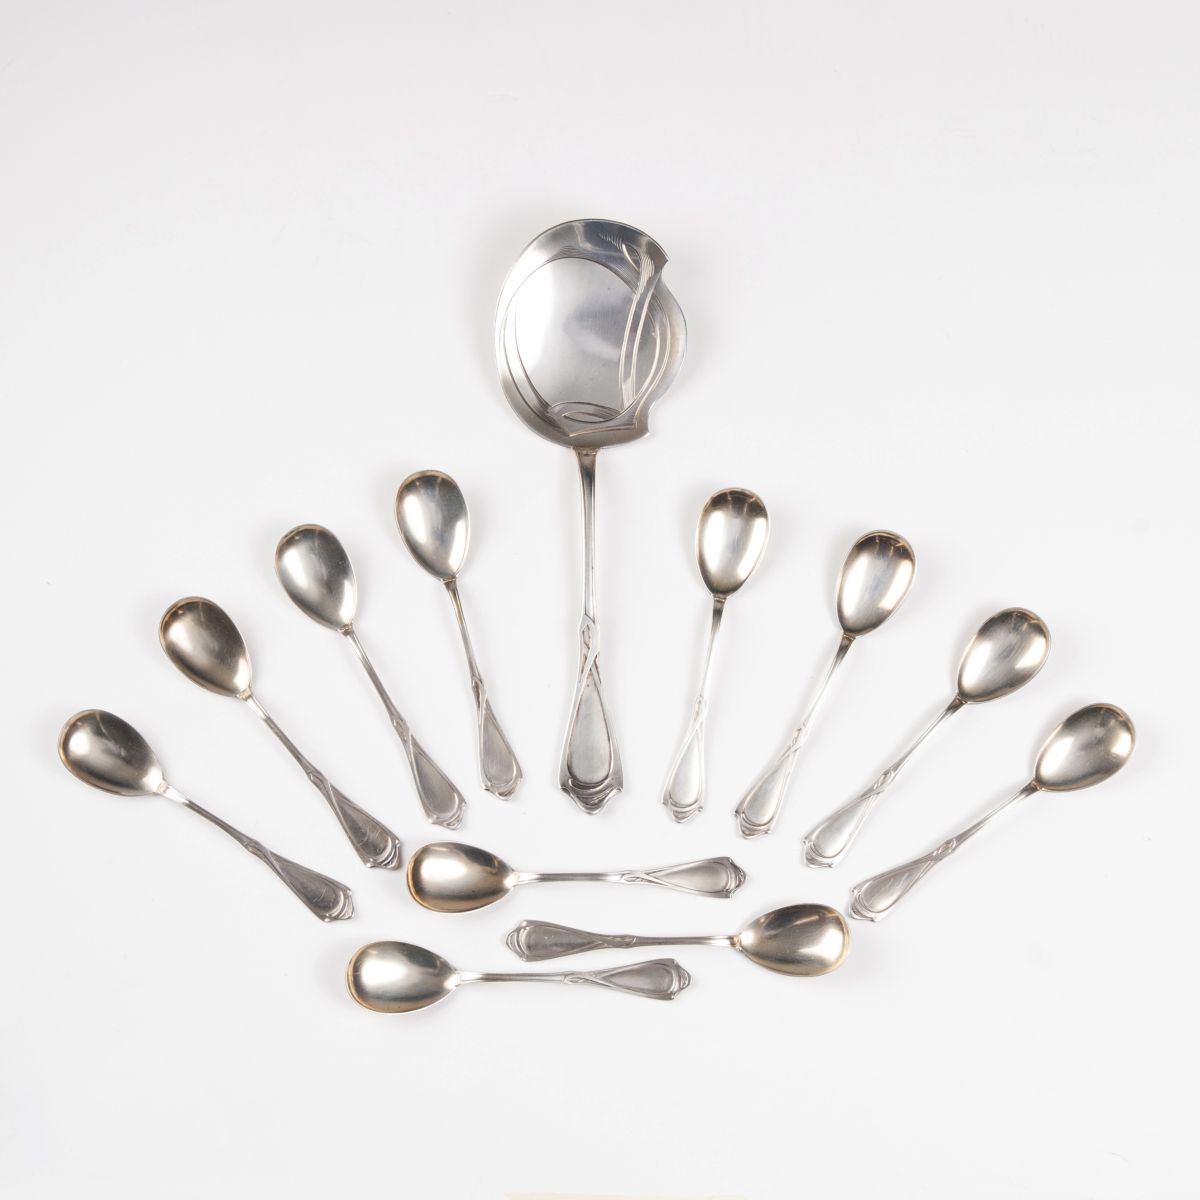 An elegant Art Nouveau icecream cutlery for 12 personen